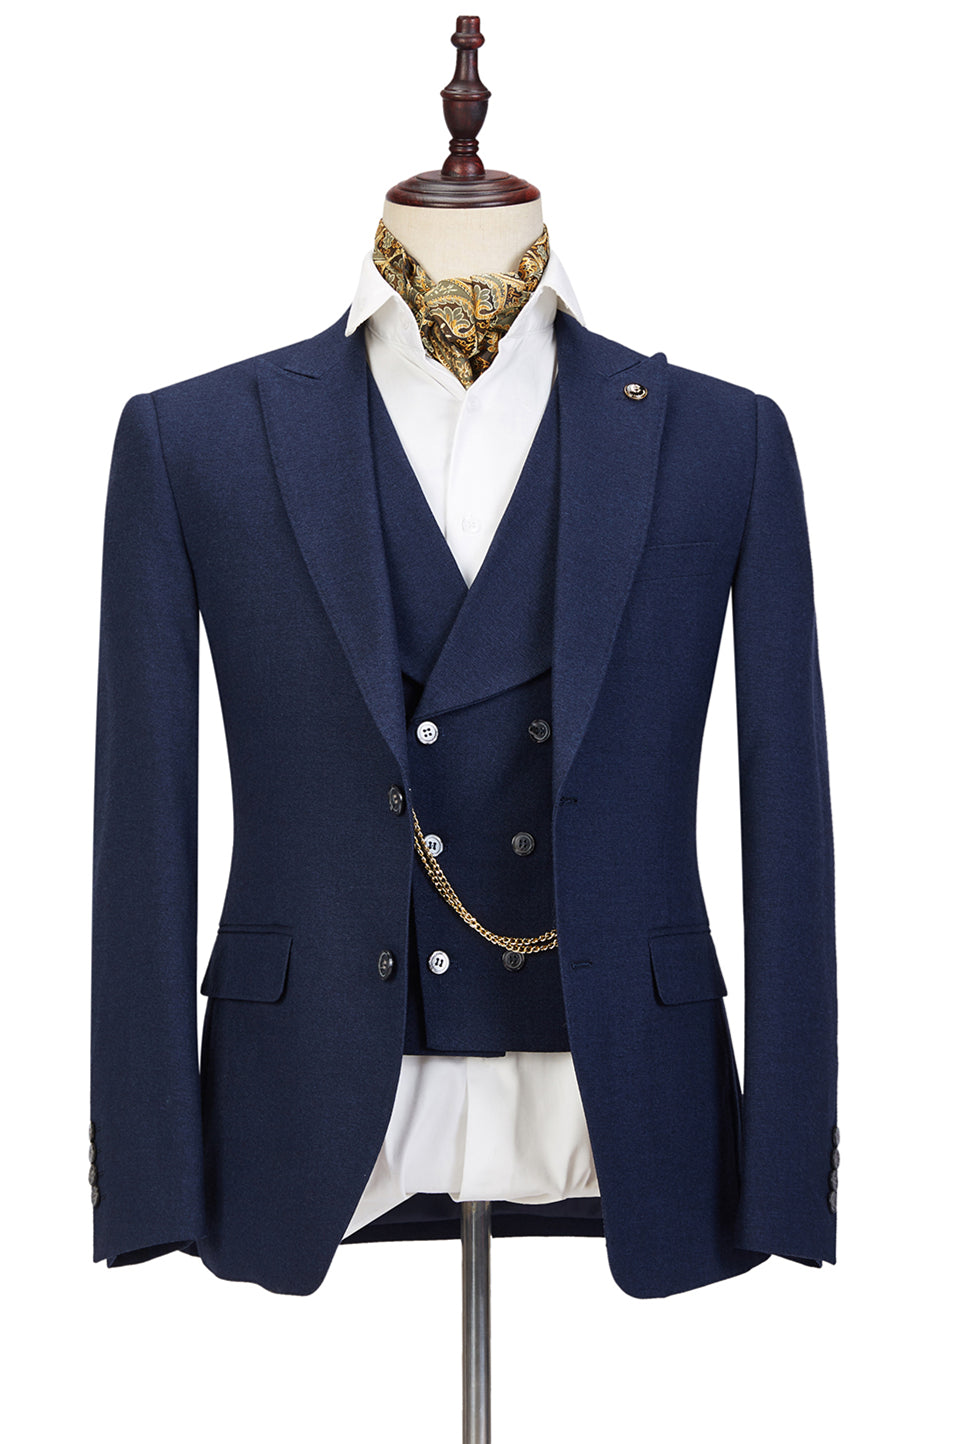 Dark Blue Three-Piece Peaked Lapel Wedding Suit For Men-Wedding Suits-BallBride